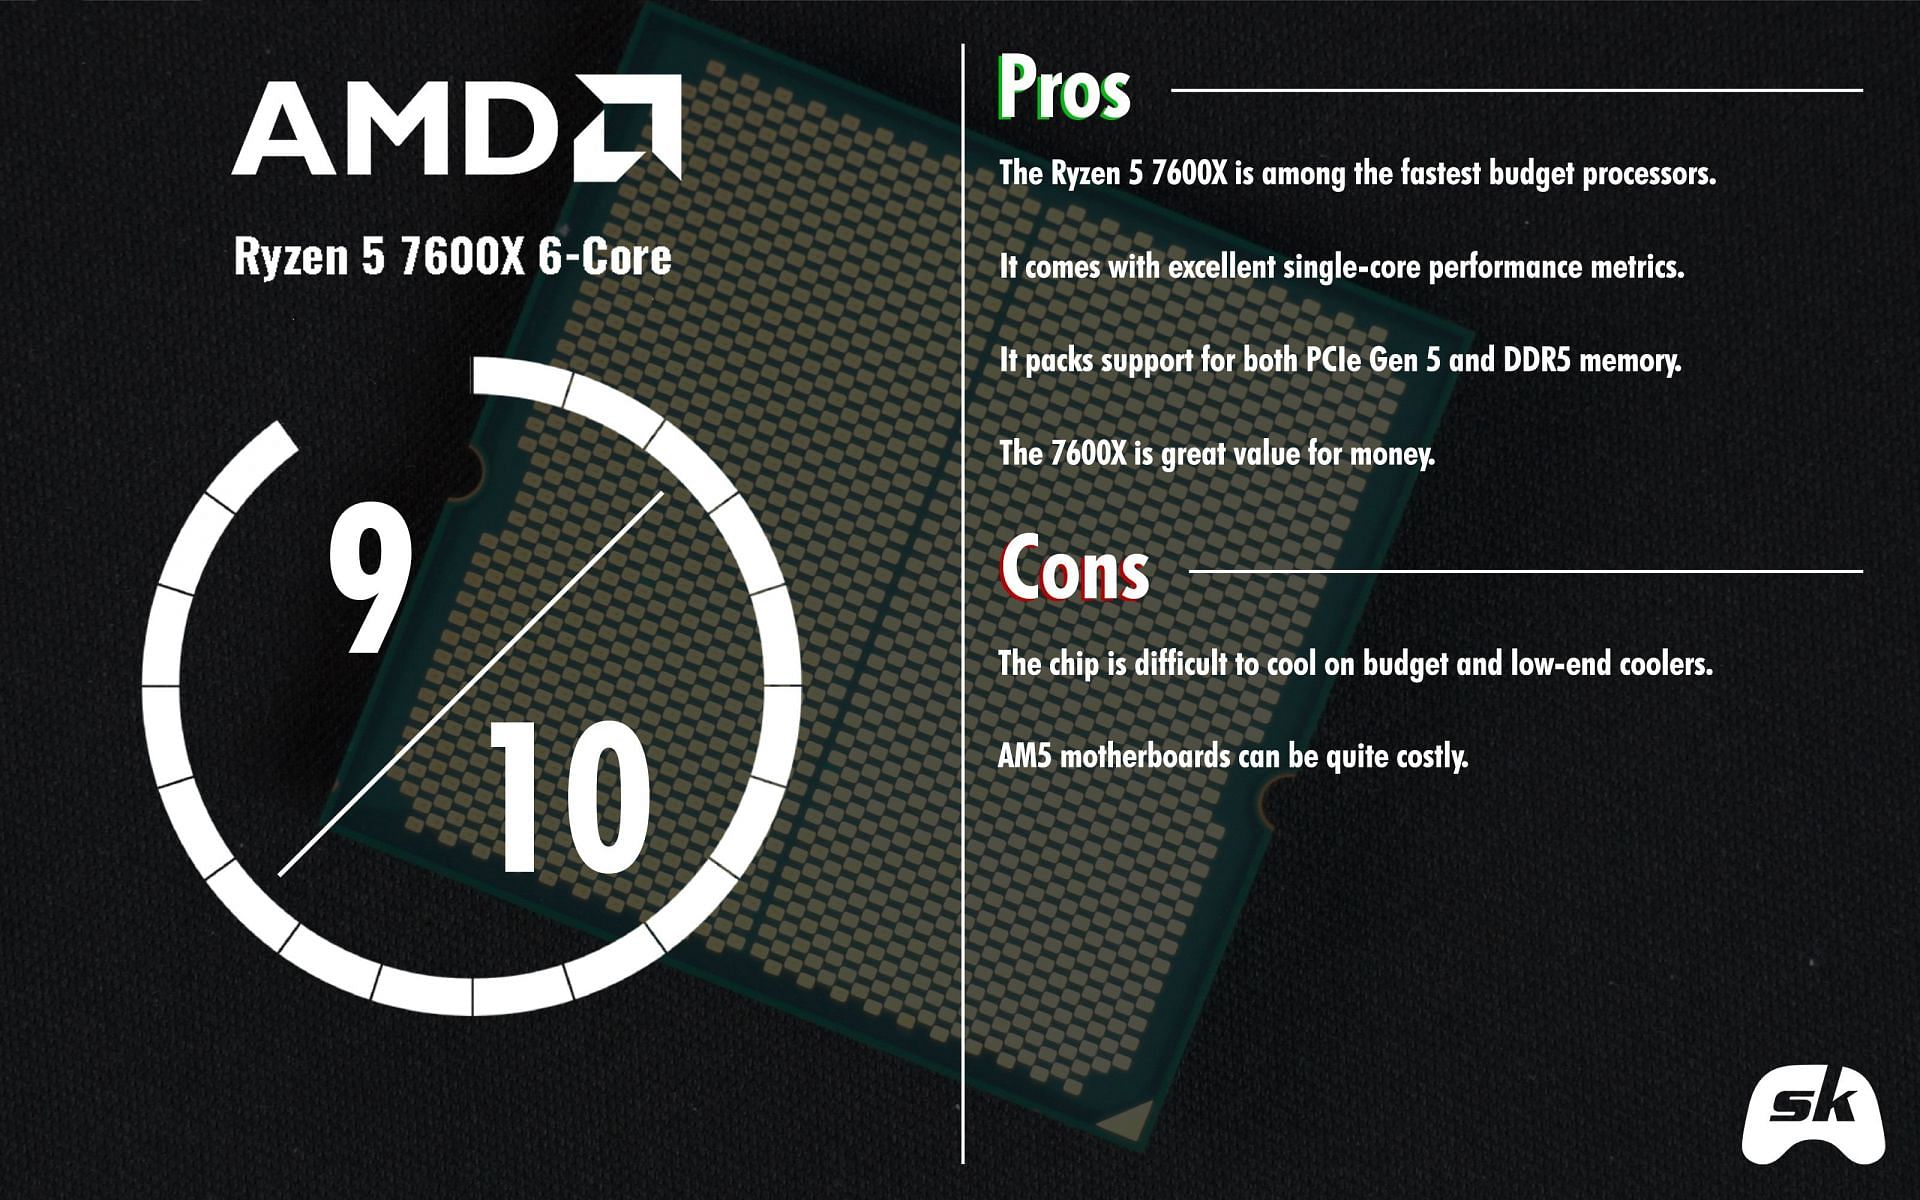 AMD Ryzen 5 7600X review: The new mid-range king?